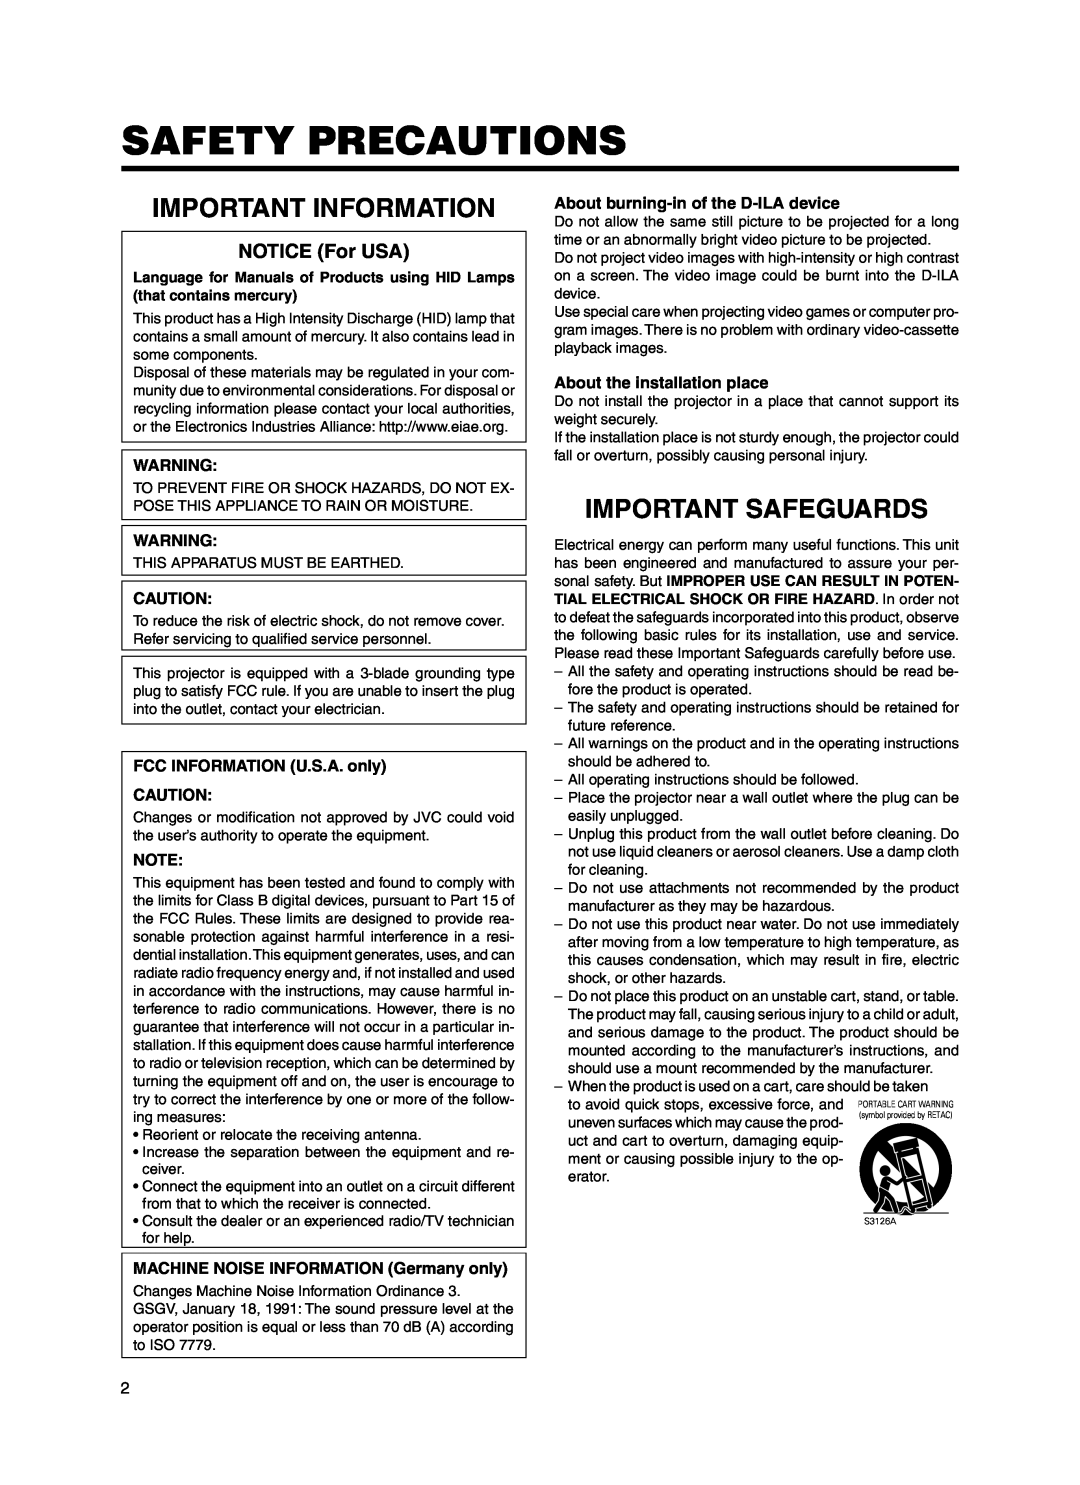 JVC Model DLA-HX1E manual Safety Precautions, Important Information, NOTICE For USA, FCC INFORMATION U.S.A. only 